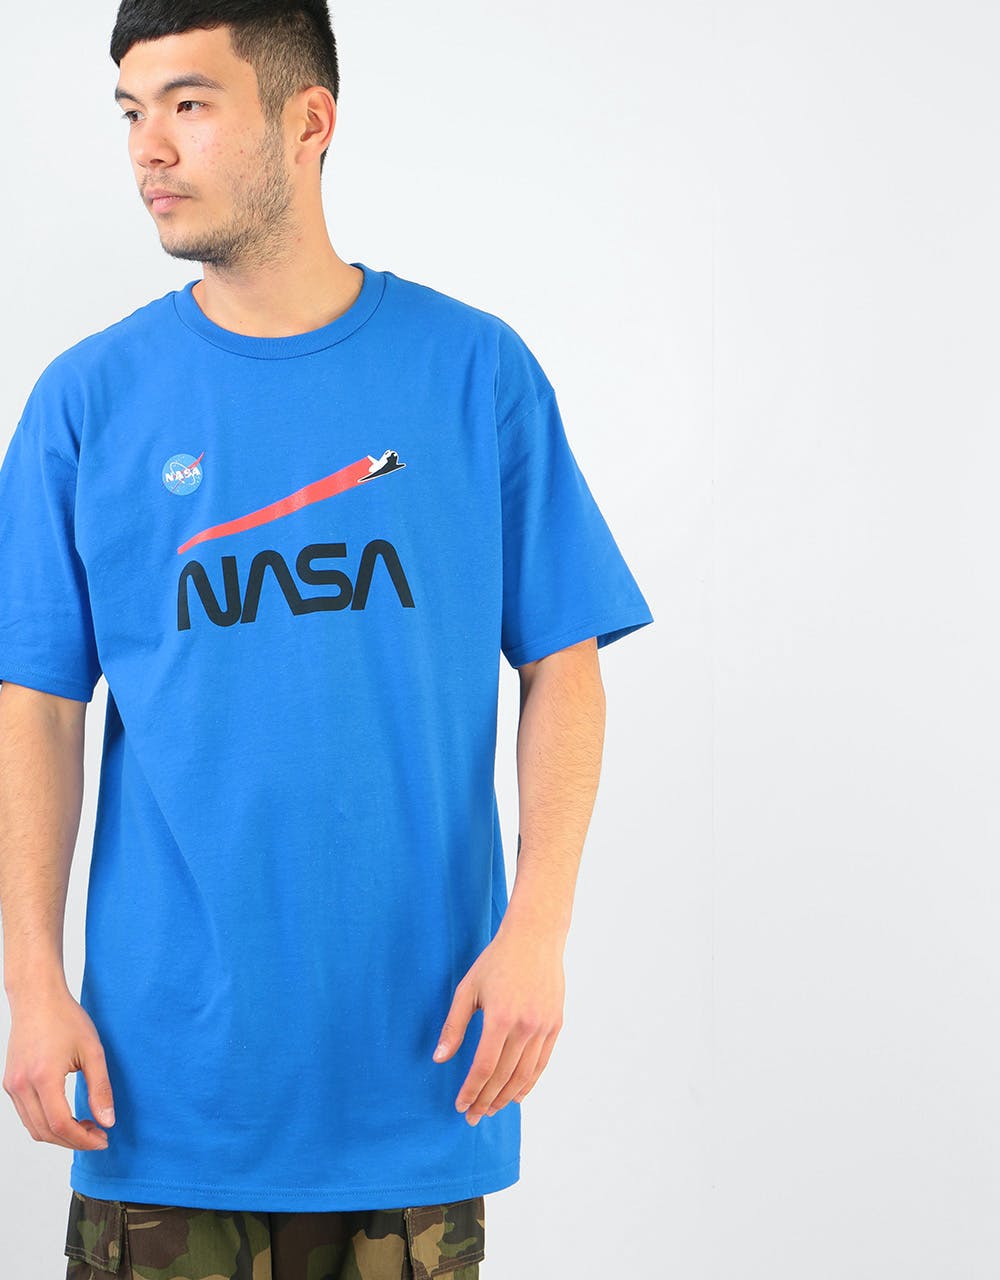 Habitat x NASA Shuttle Flight T-Shirt - Royal Blue